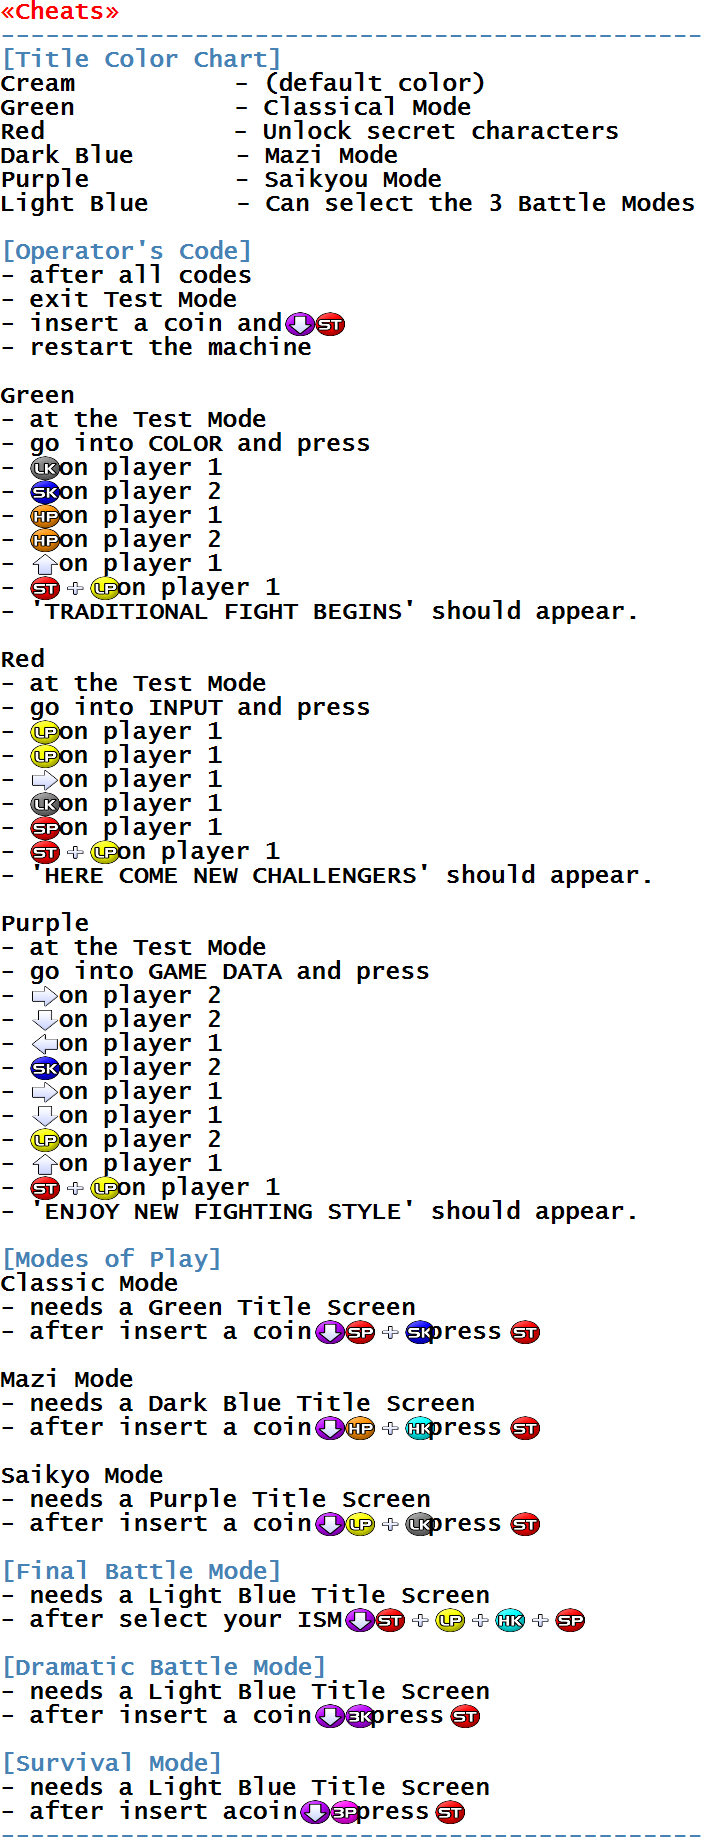 List of moves in Street Fighter Alpha 3 I-Z